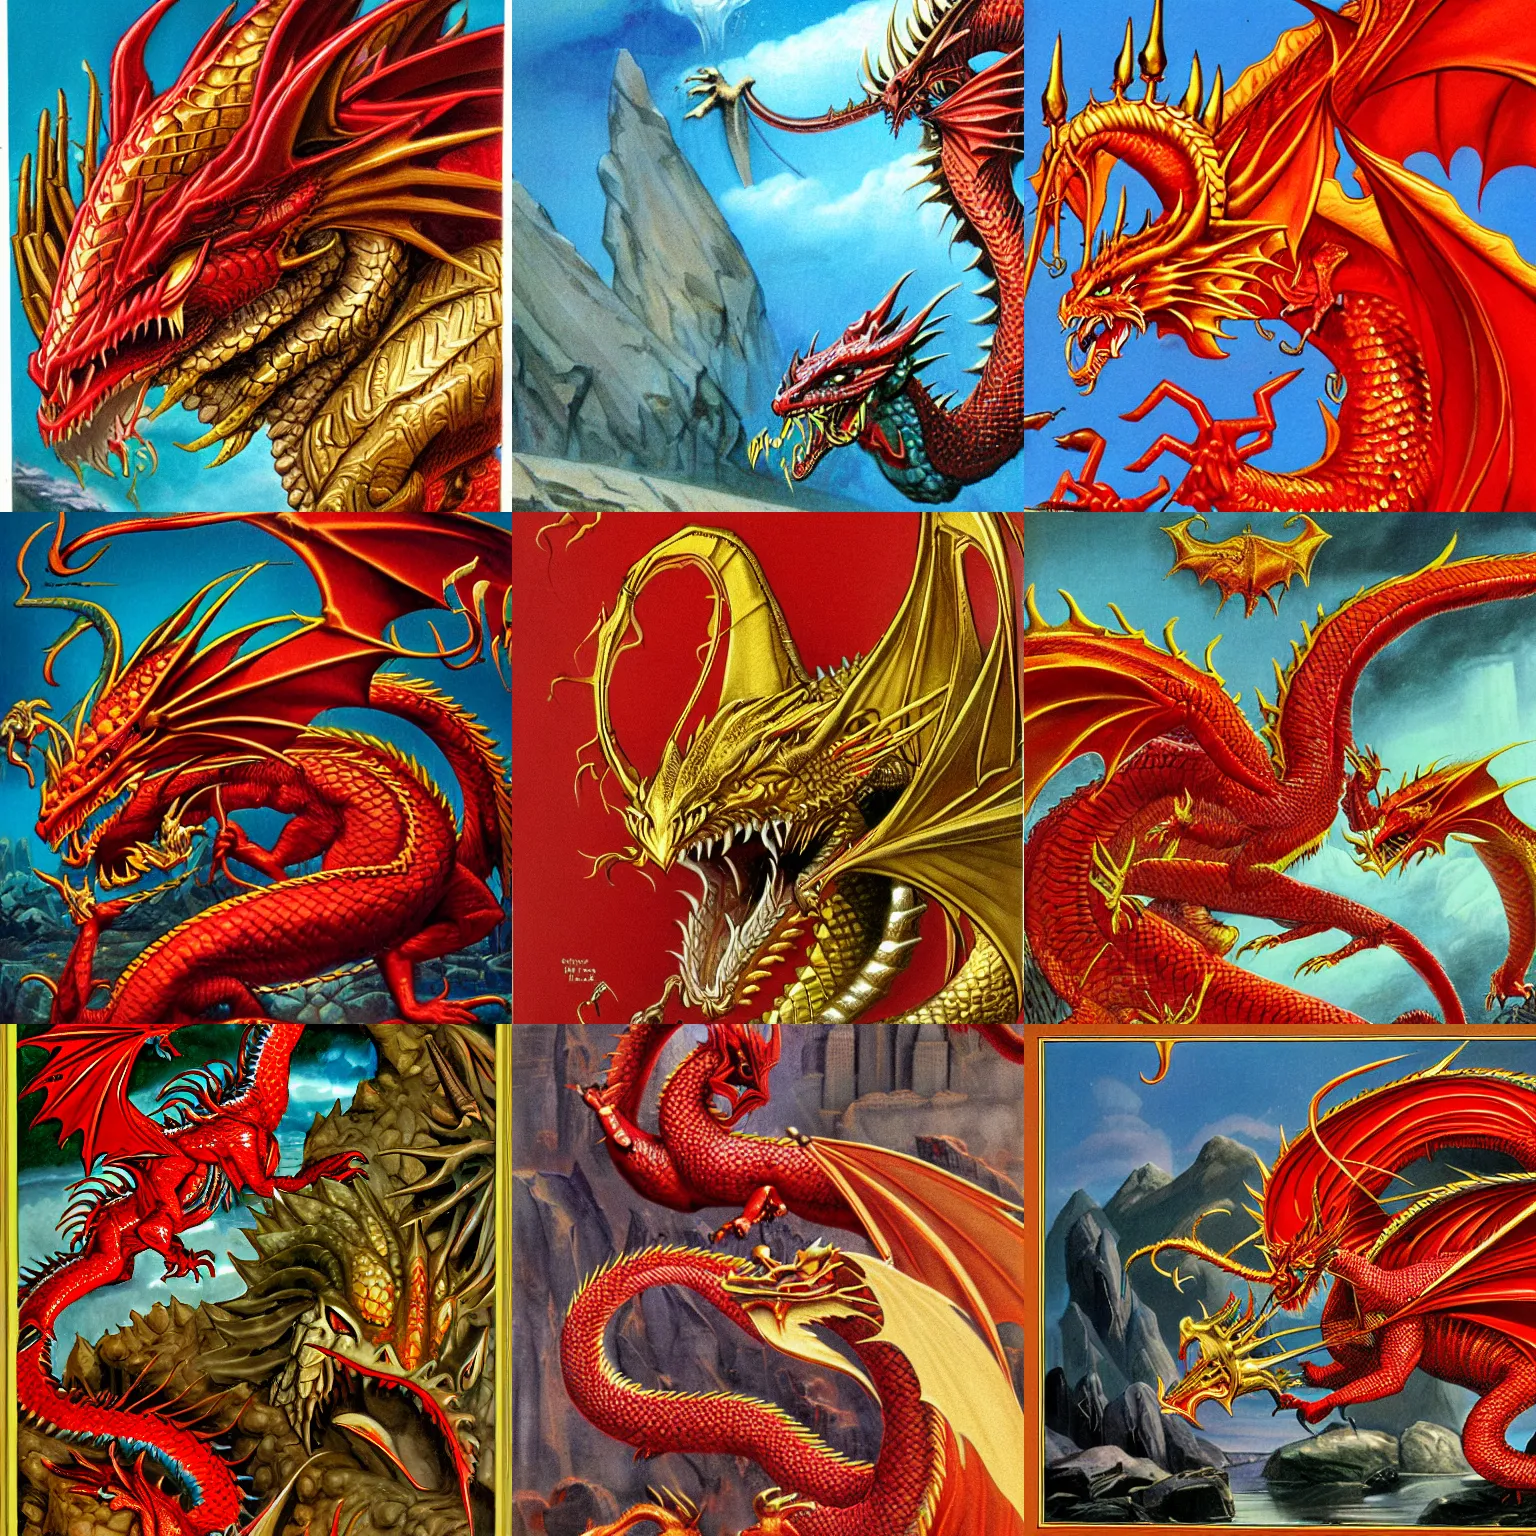 Prompt: A Red Dragon hoarding Gold, Fantasy Illustration, 1985, high detail